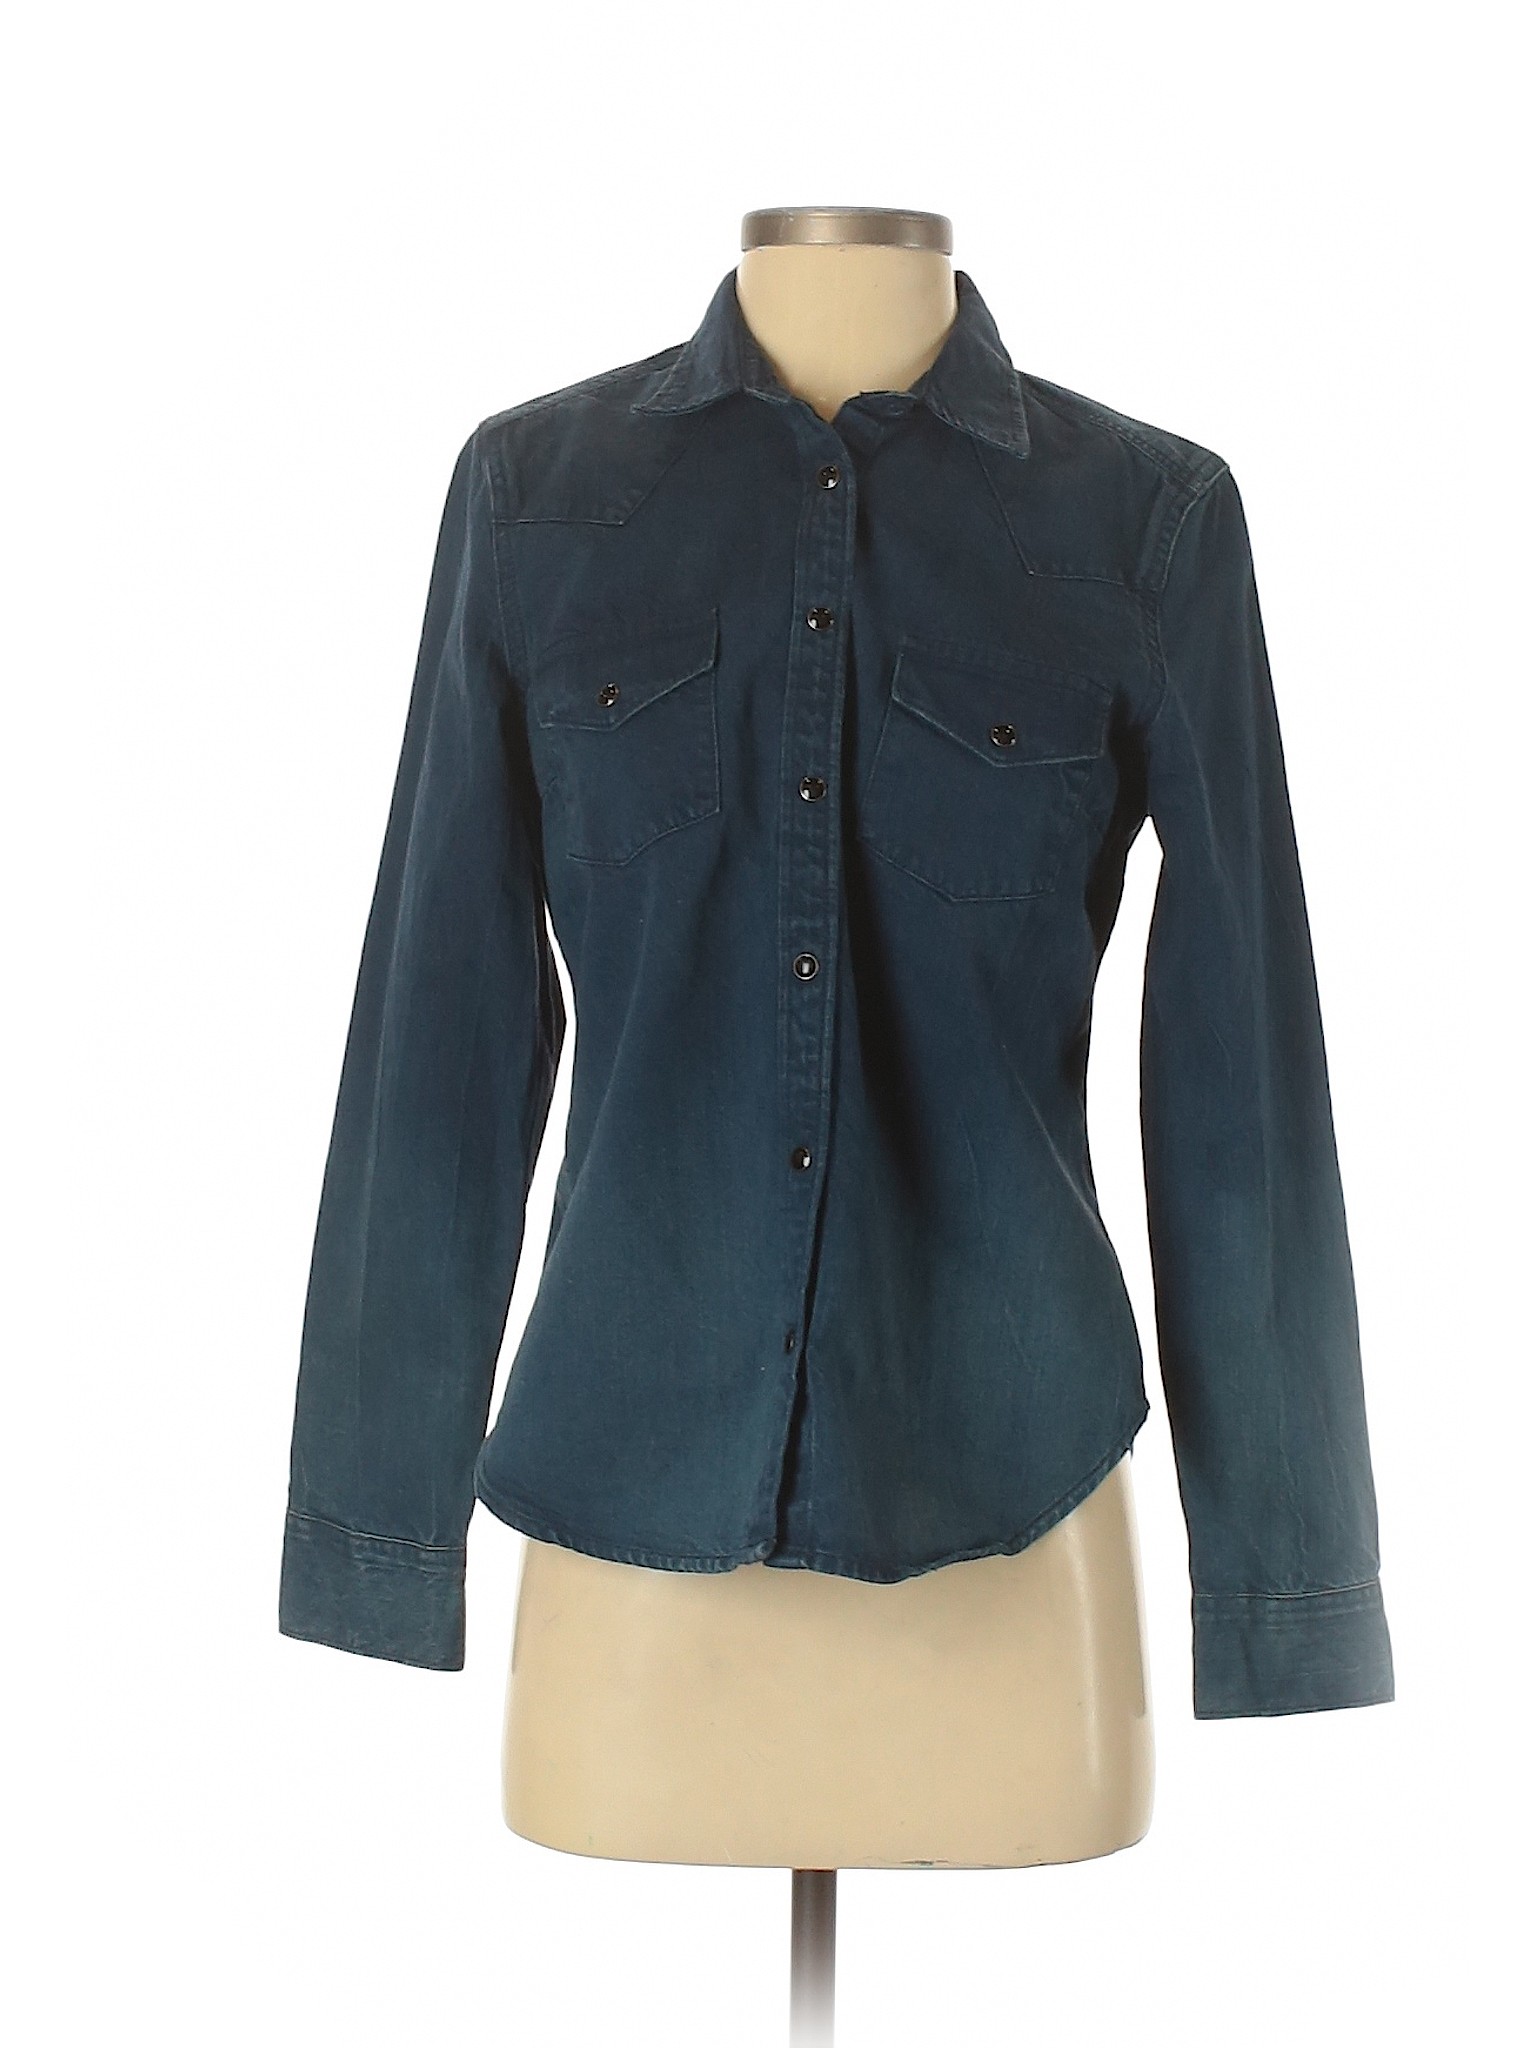 Gap Women Blue Long Sleeve Button-Down Shirt S | eBay